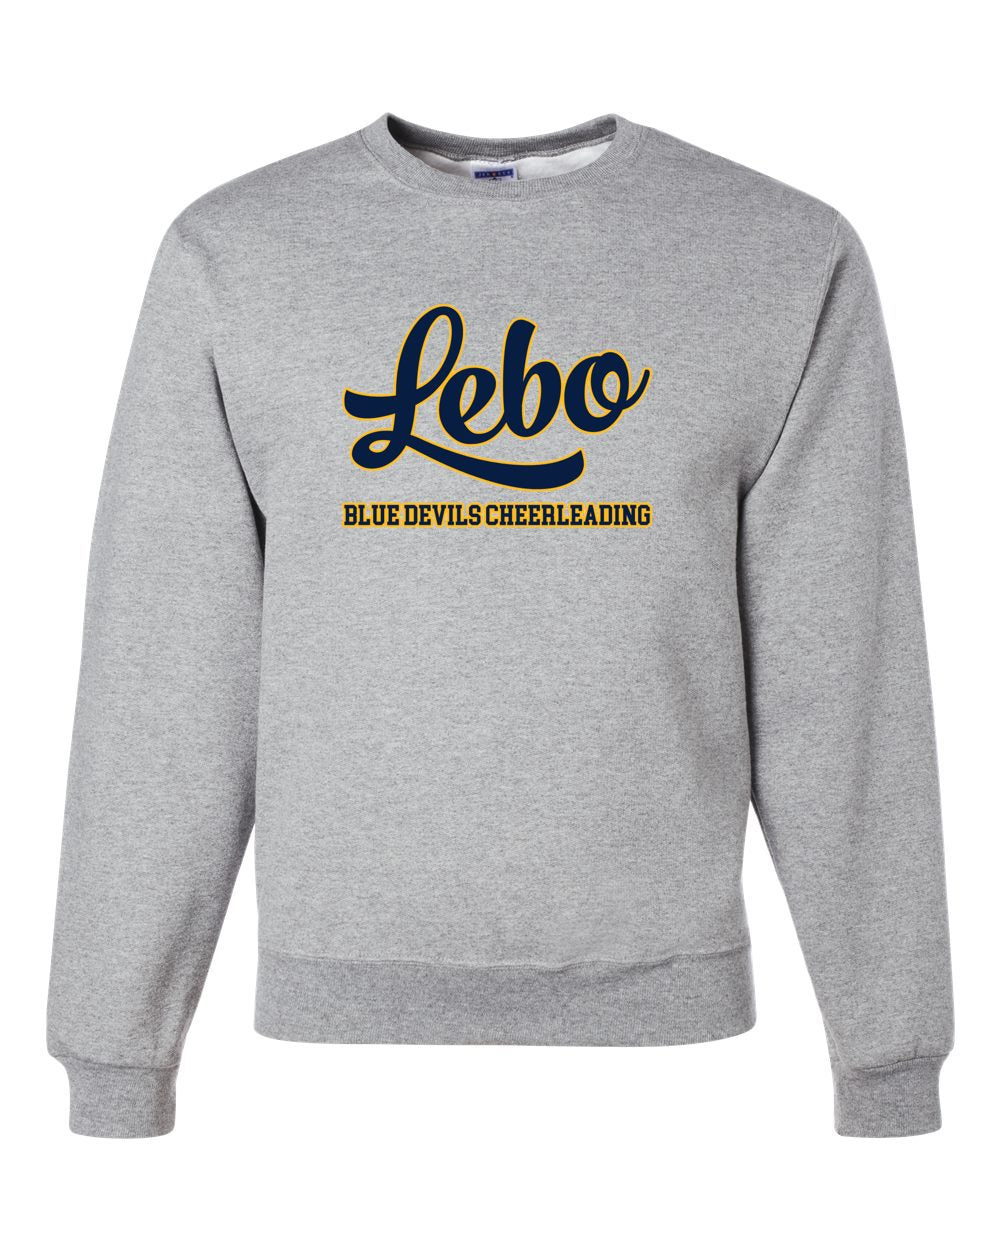 Grey LEBO CHEER Crew Sweatshirt